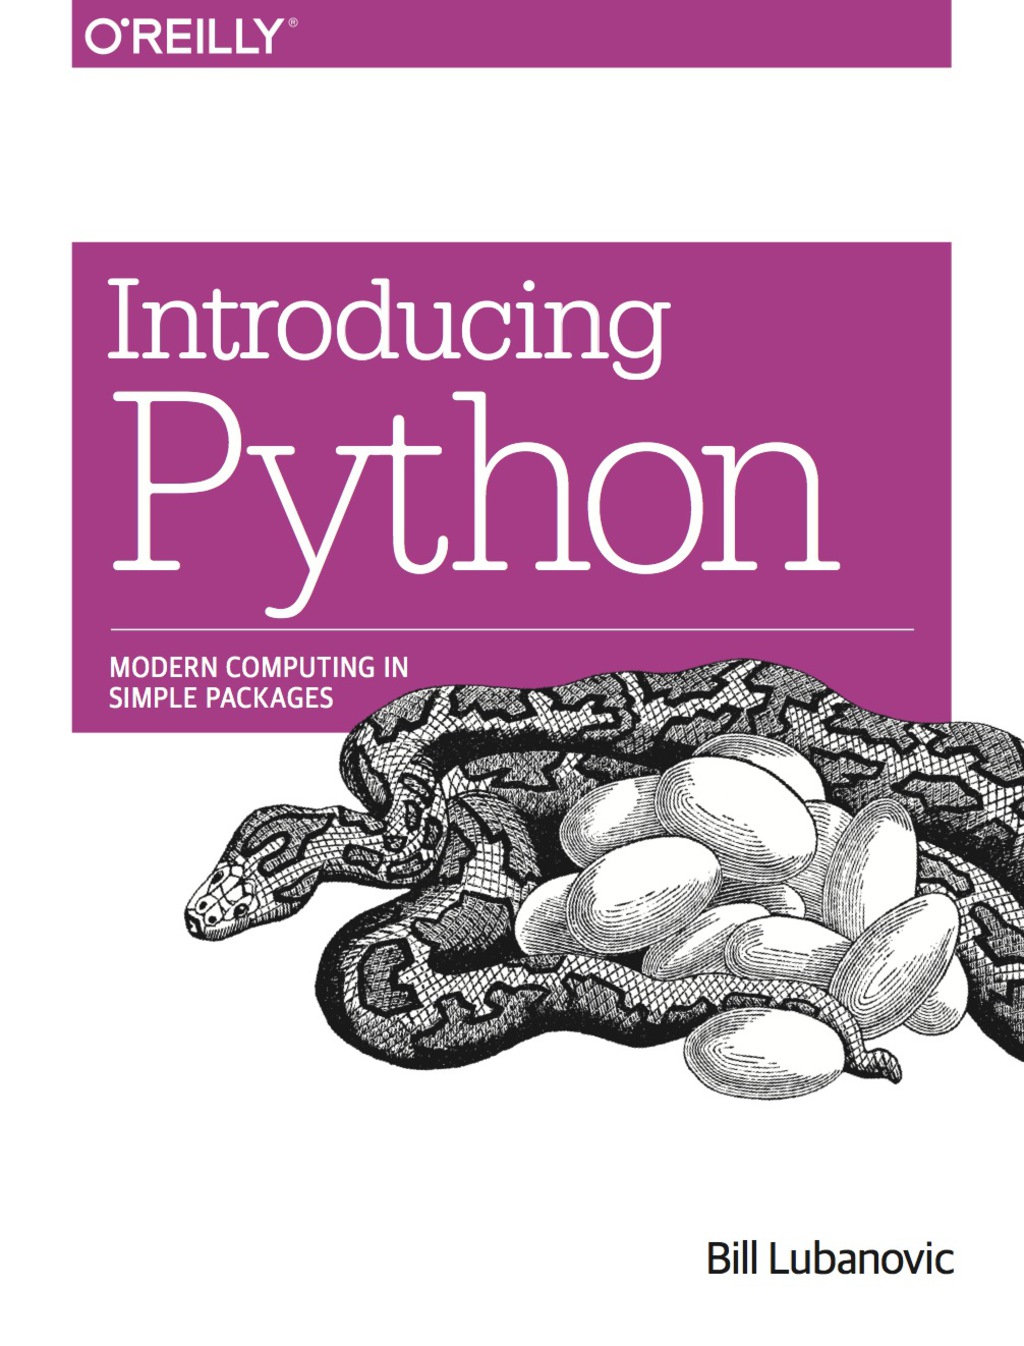 Introducing Python (eBook) - Bill Lubanovic